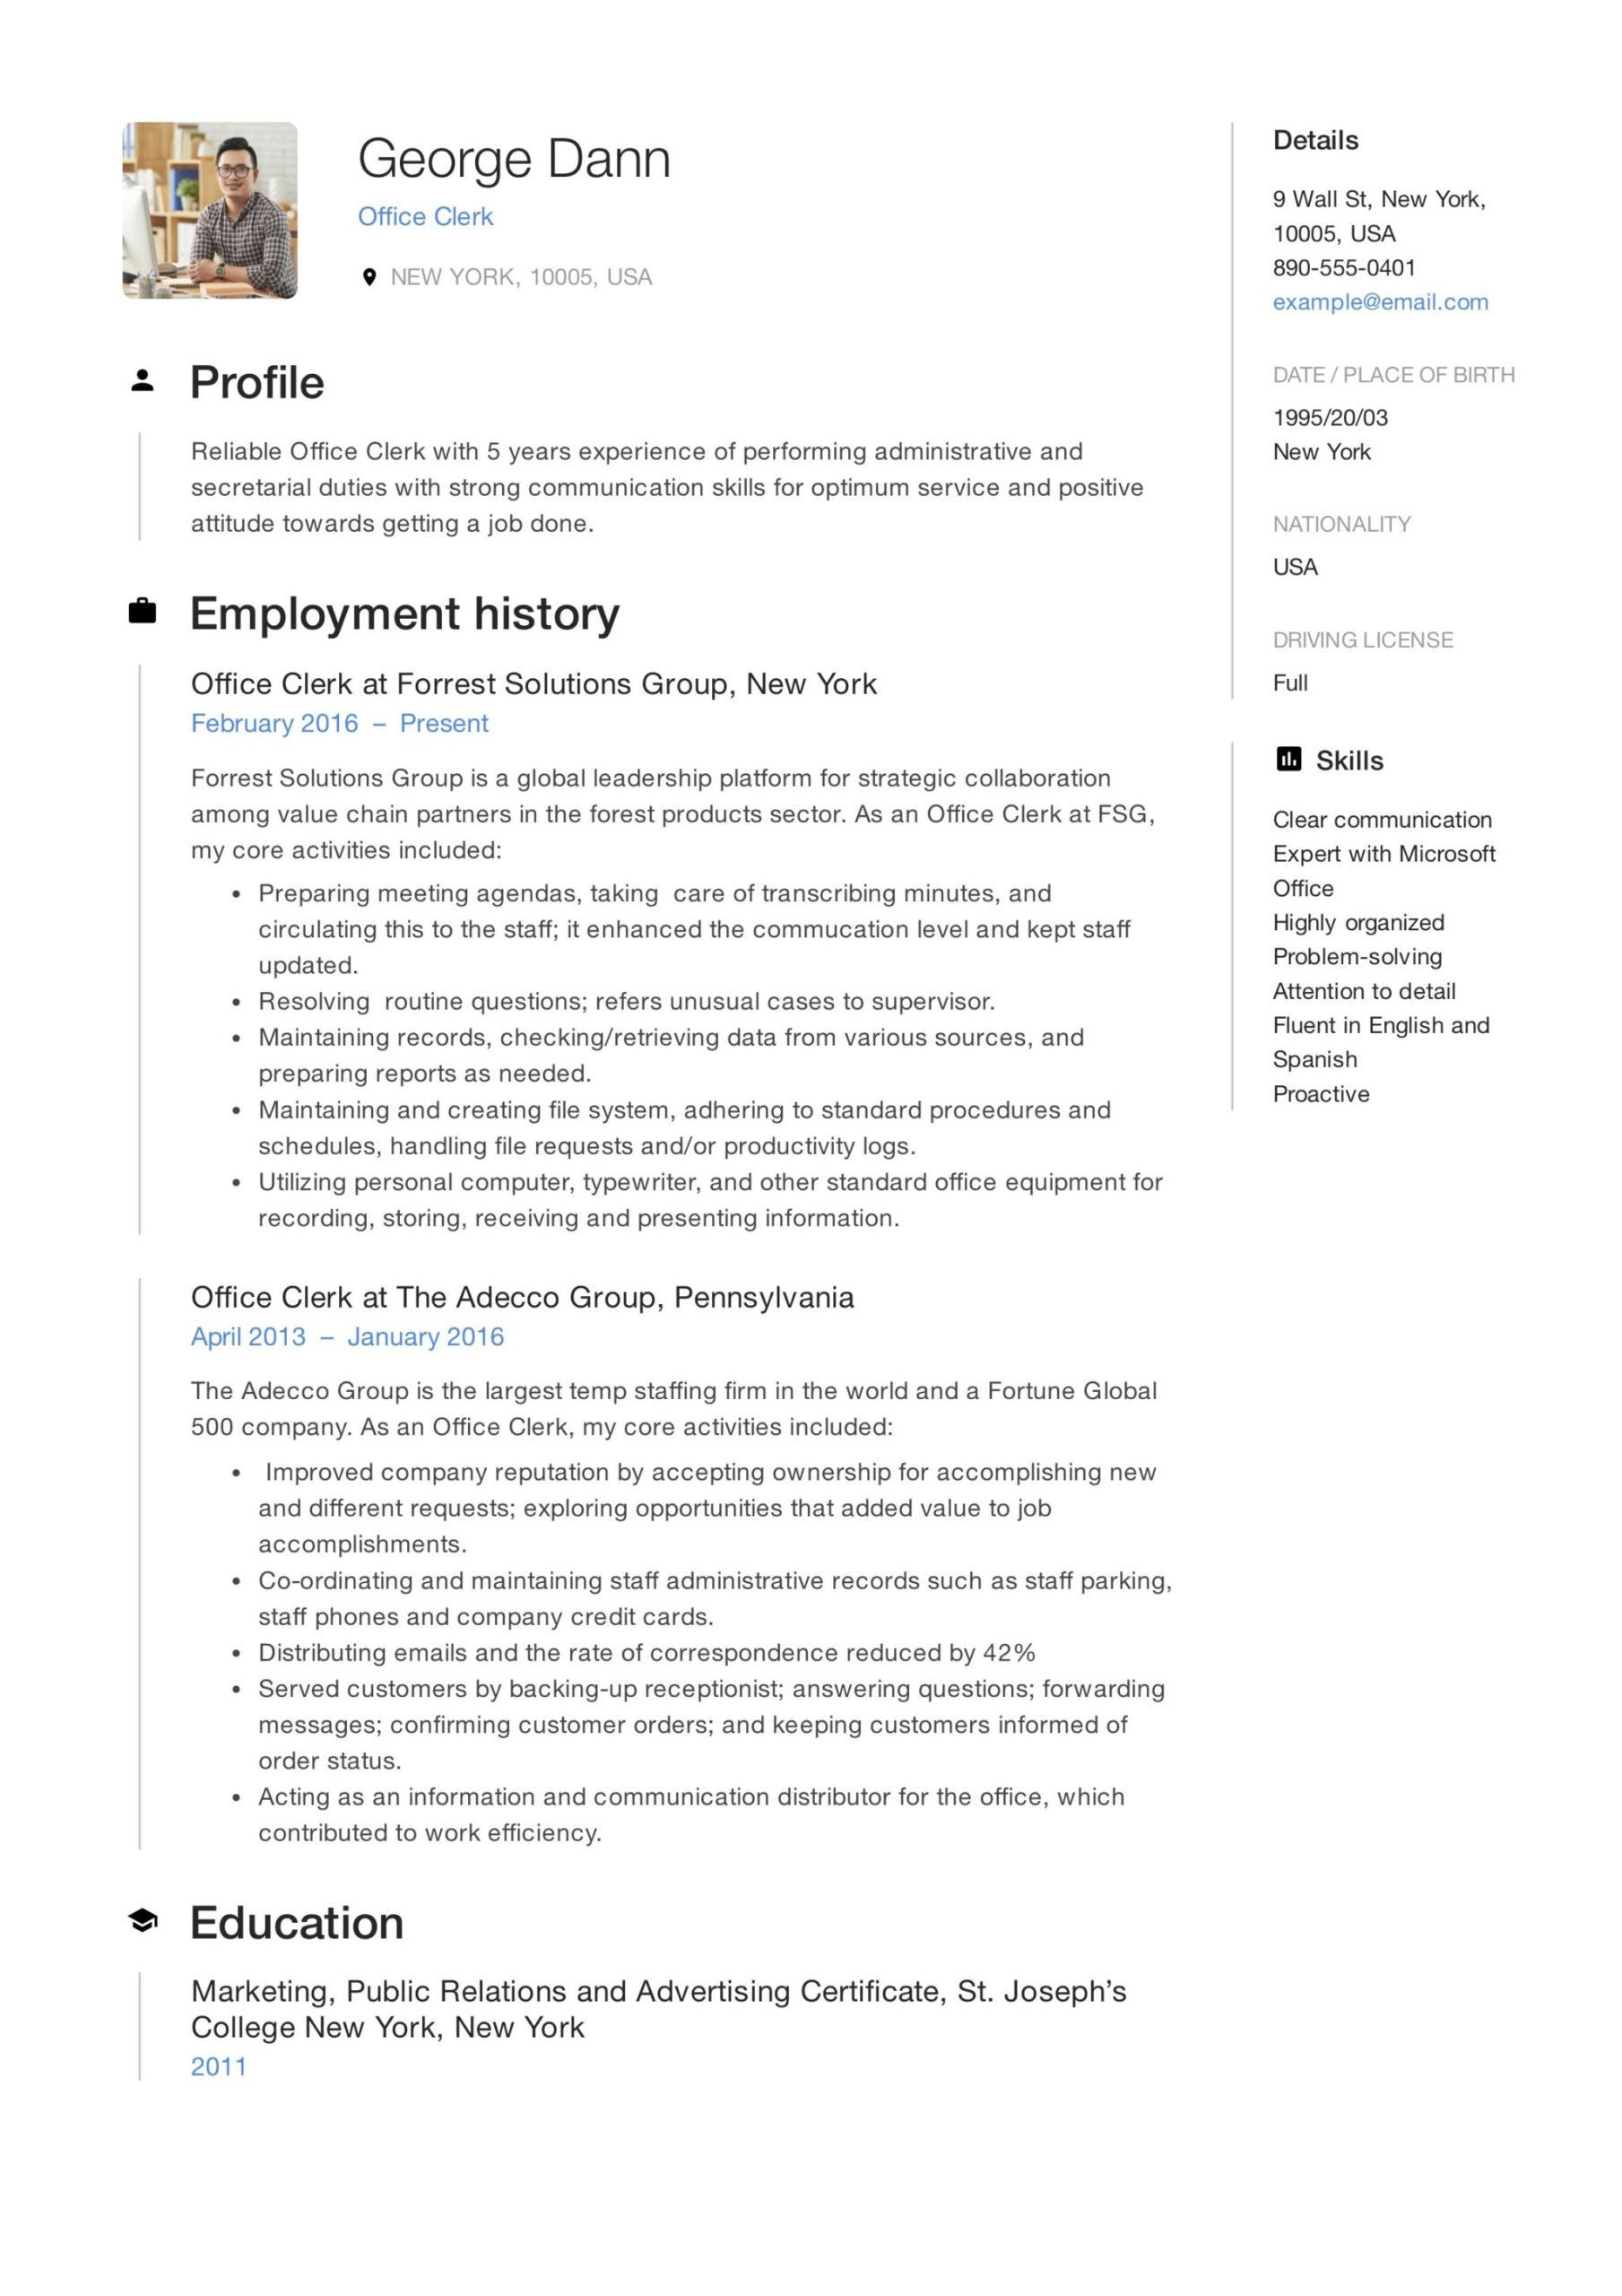 Sample Resume for School Clerical Position Office Clerk Resume & Guide  12 Samples Pdf 2021